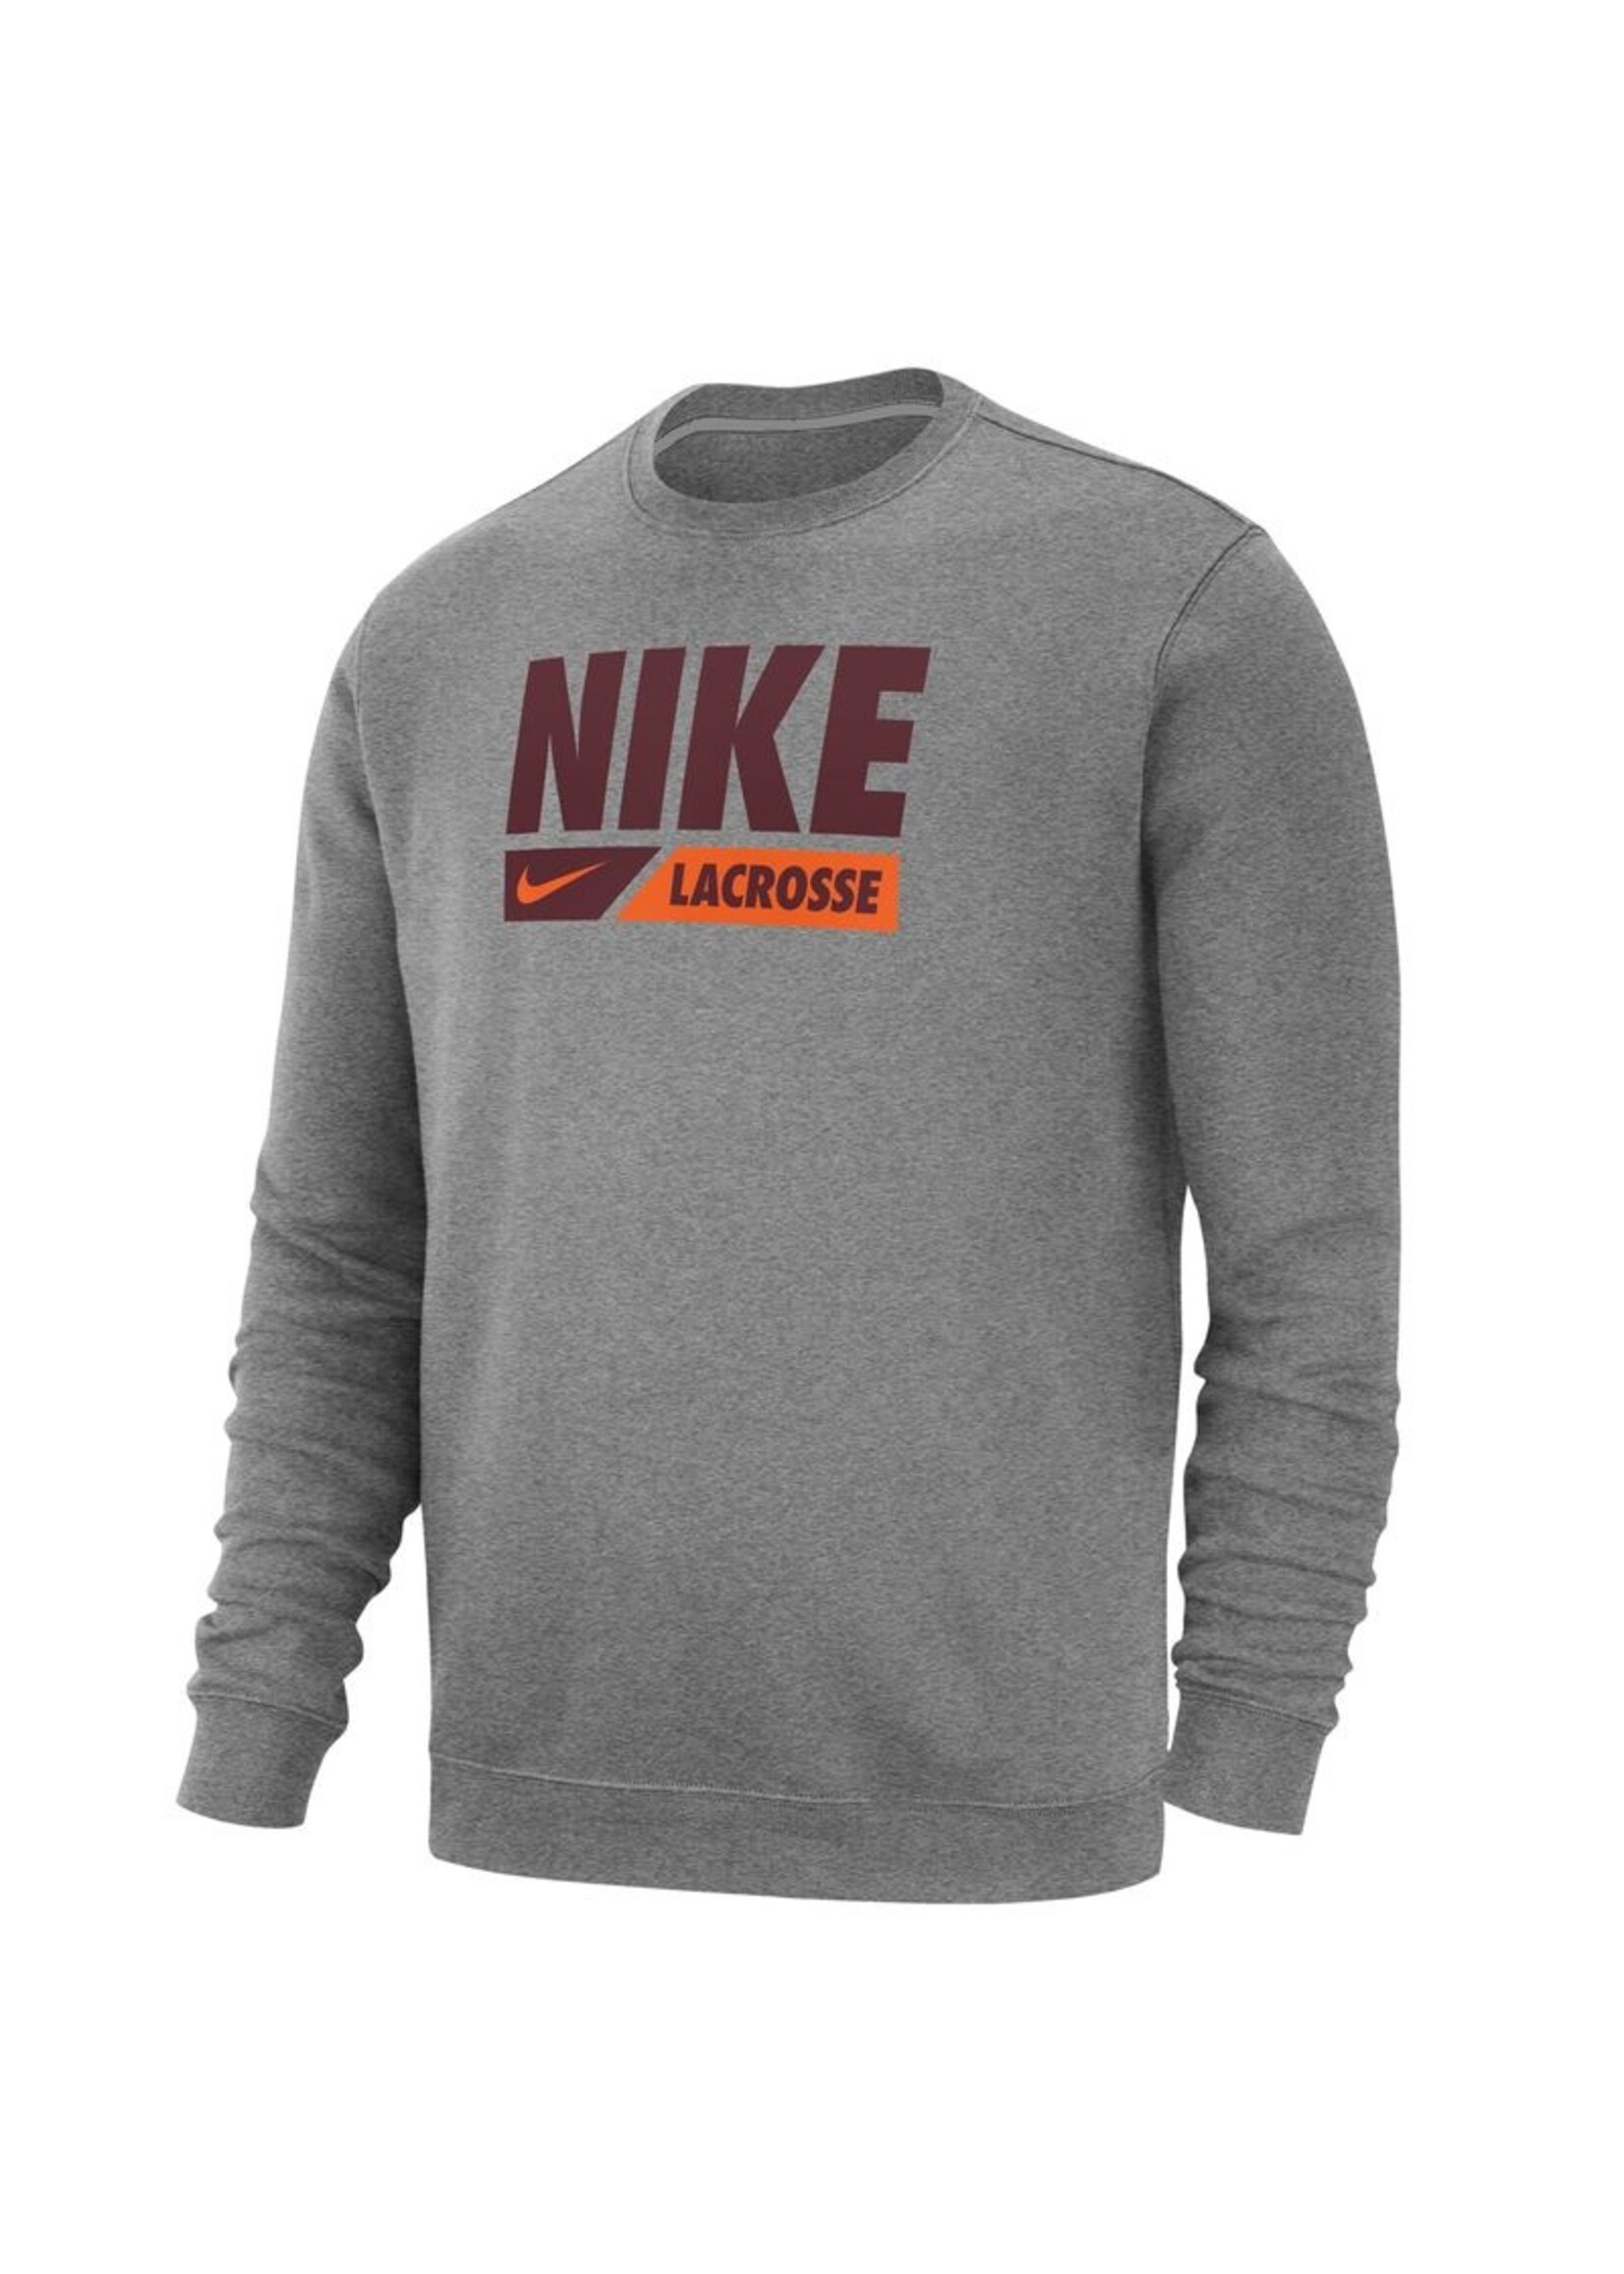 Nike Swoosh Lacrosse Club Fleece Crew